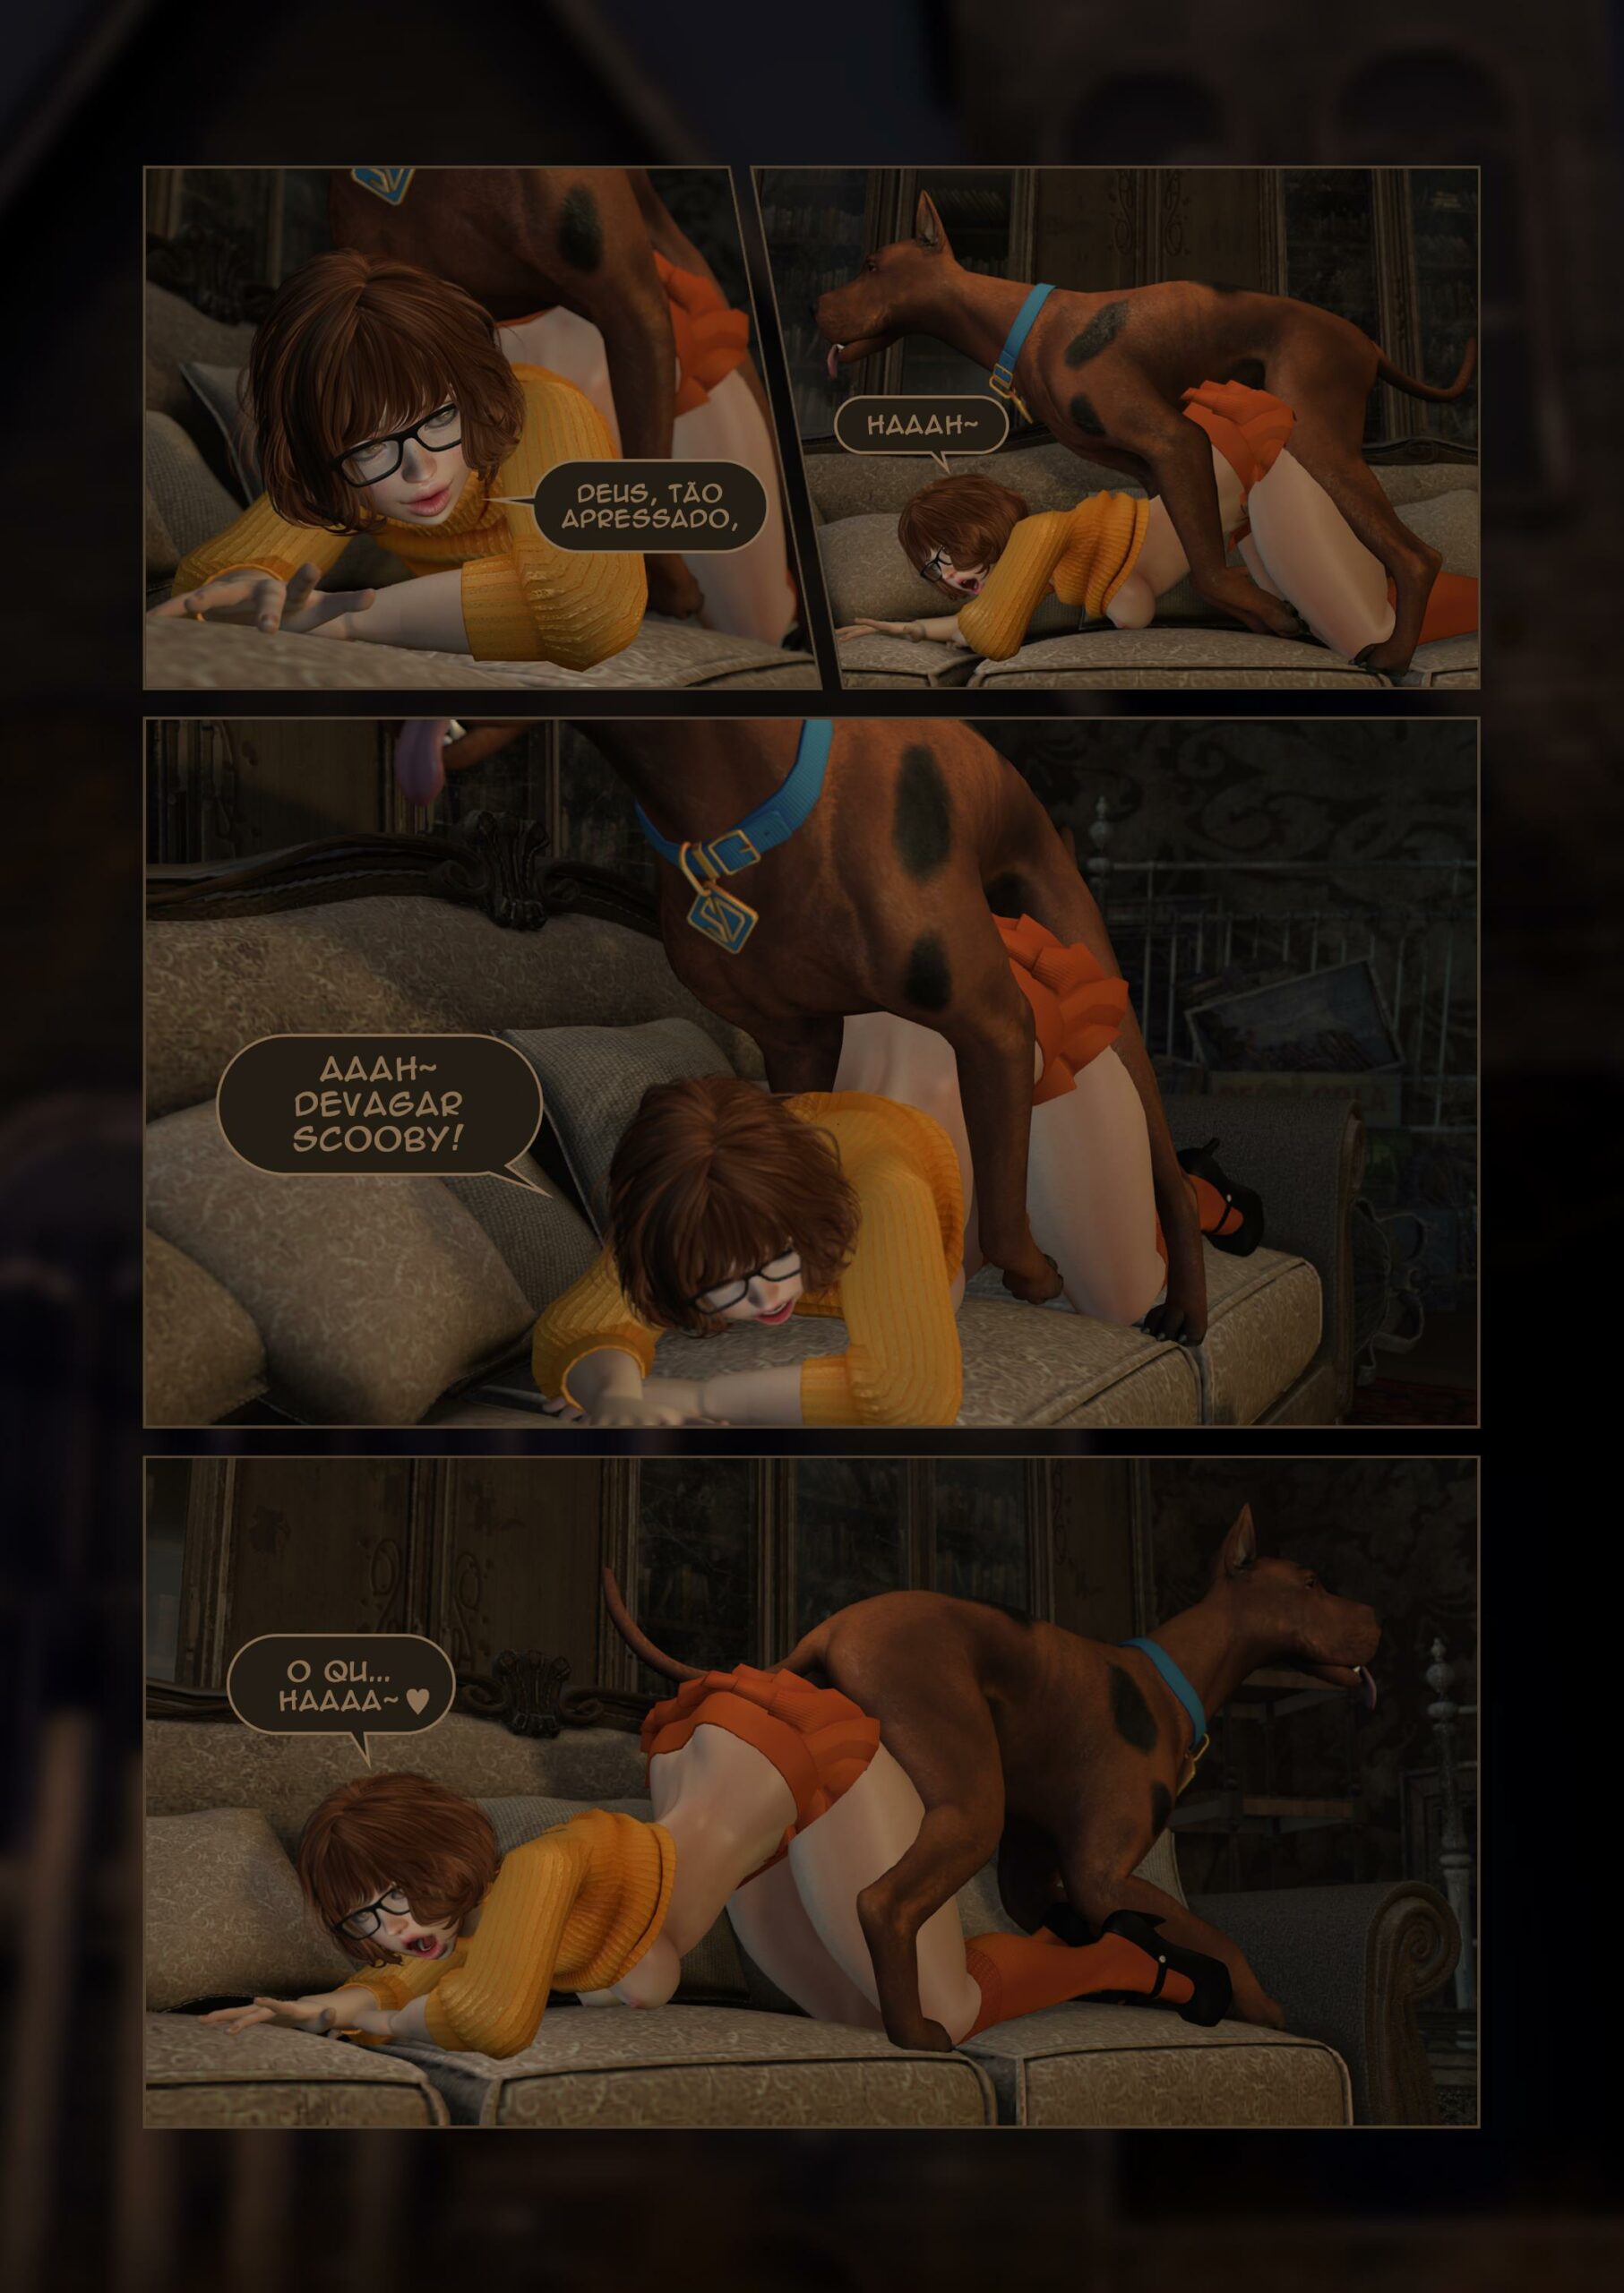 Scooby Doo à procura de pista